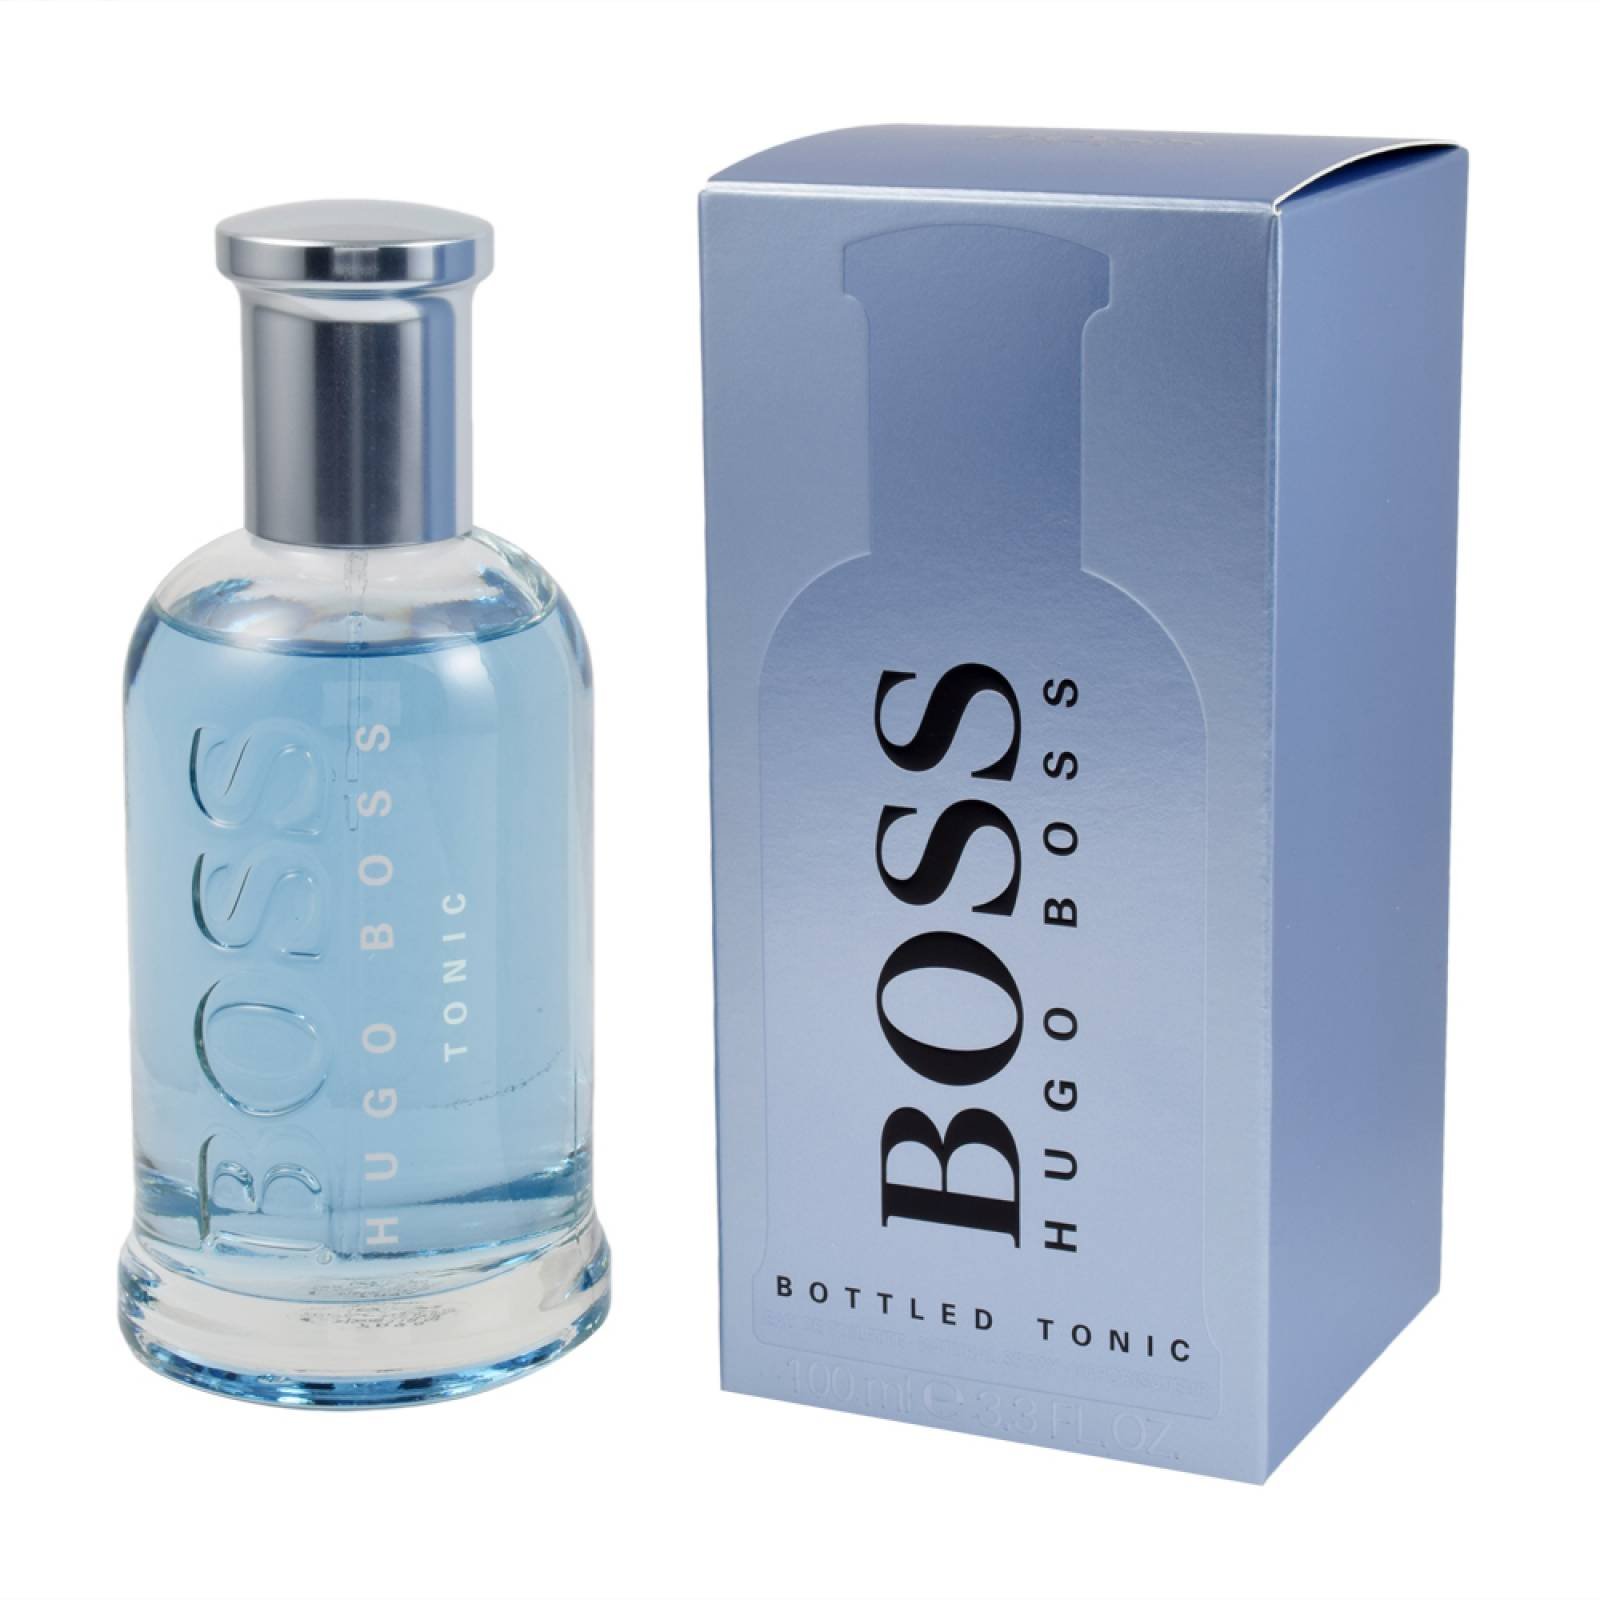 Boss Bottled Tonic 100 ml Eau de Toilette de Hugo Boss Fragancia para ...